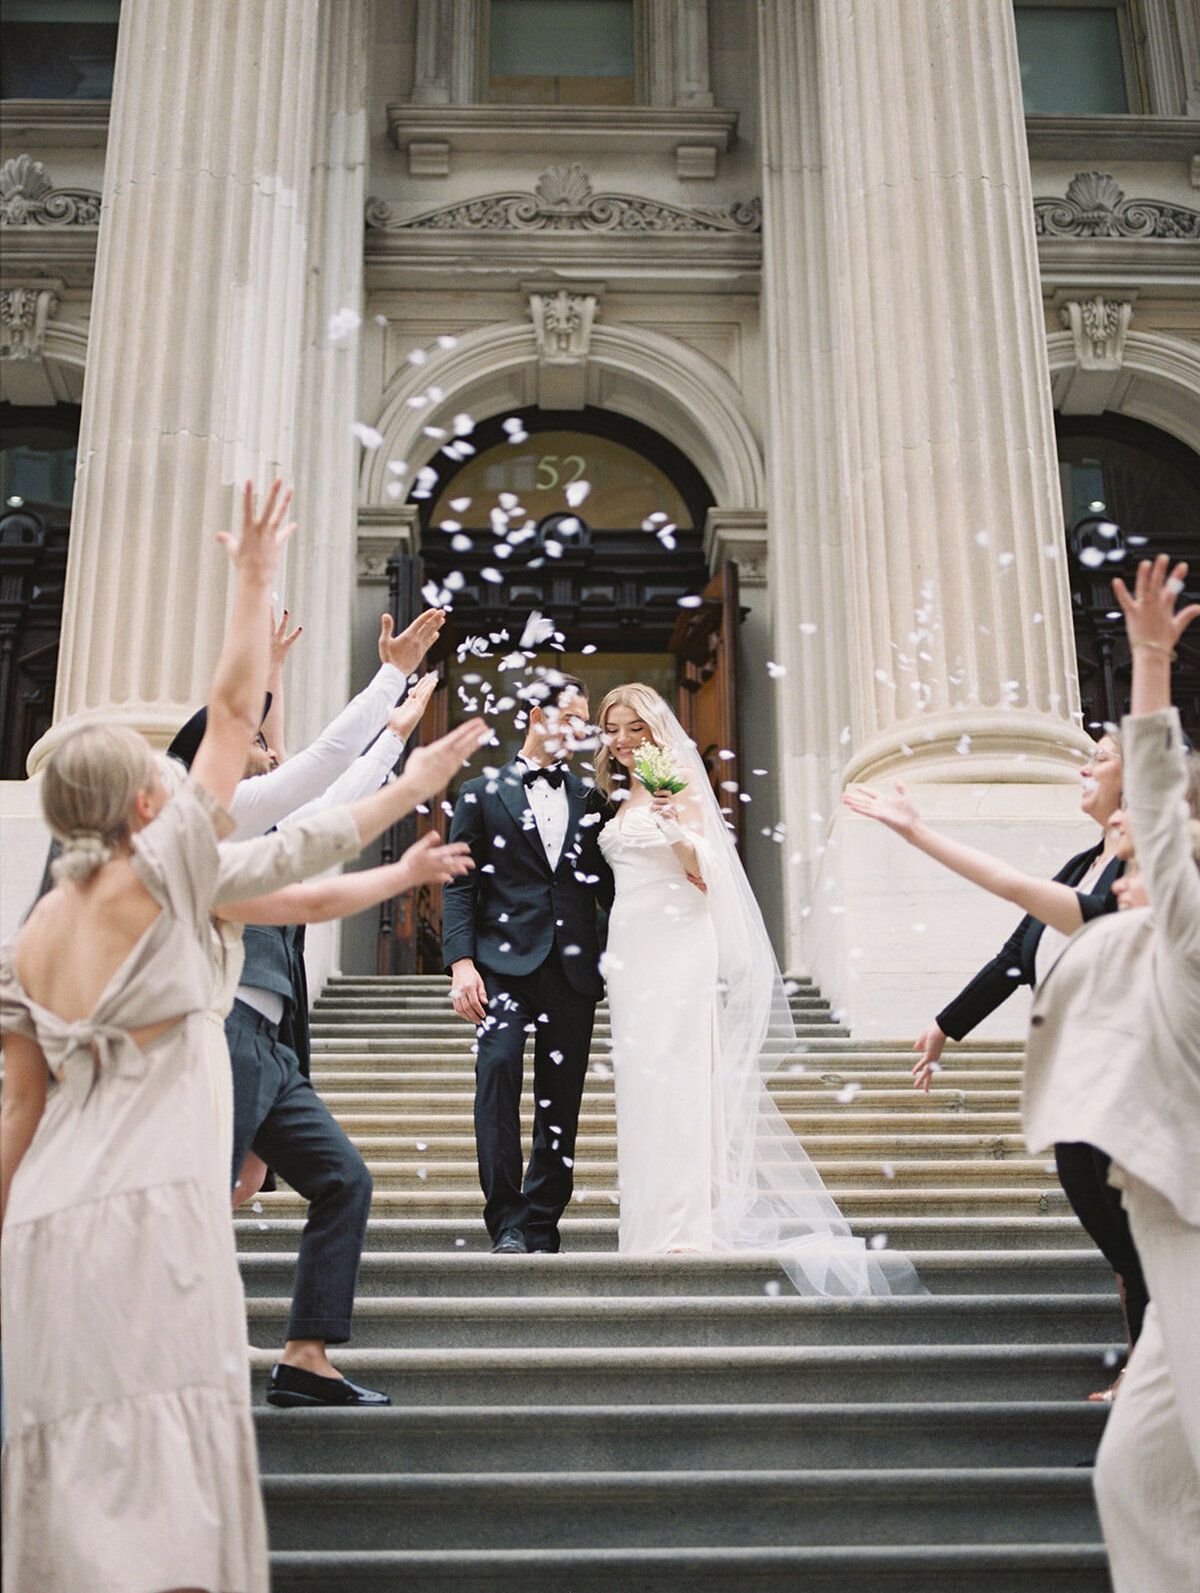 The Plaza Hotel - New York City - Elopement Wedding - Stephanie Michelle Photography - _stephaniemichellephotog - 39-R1-E006